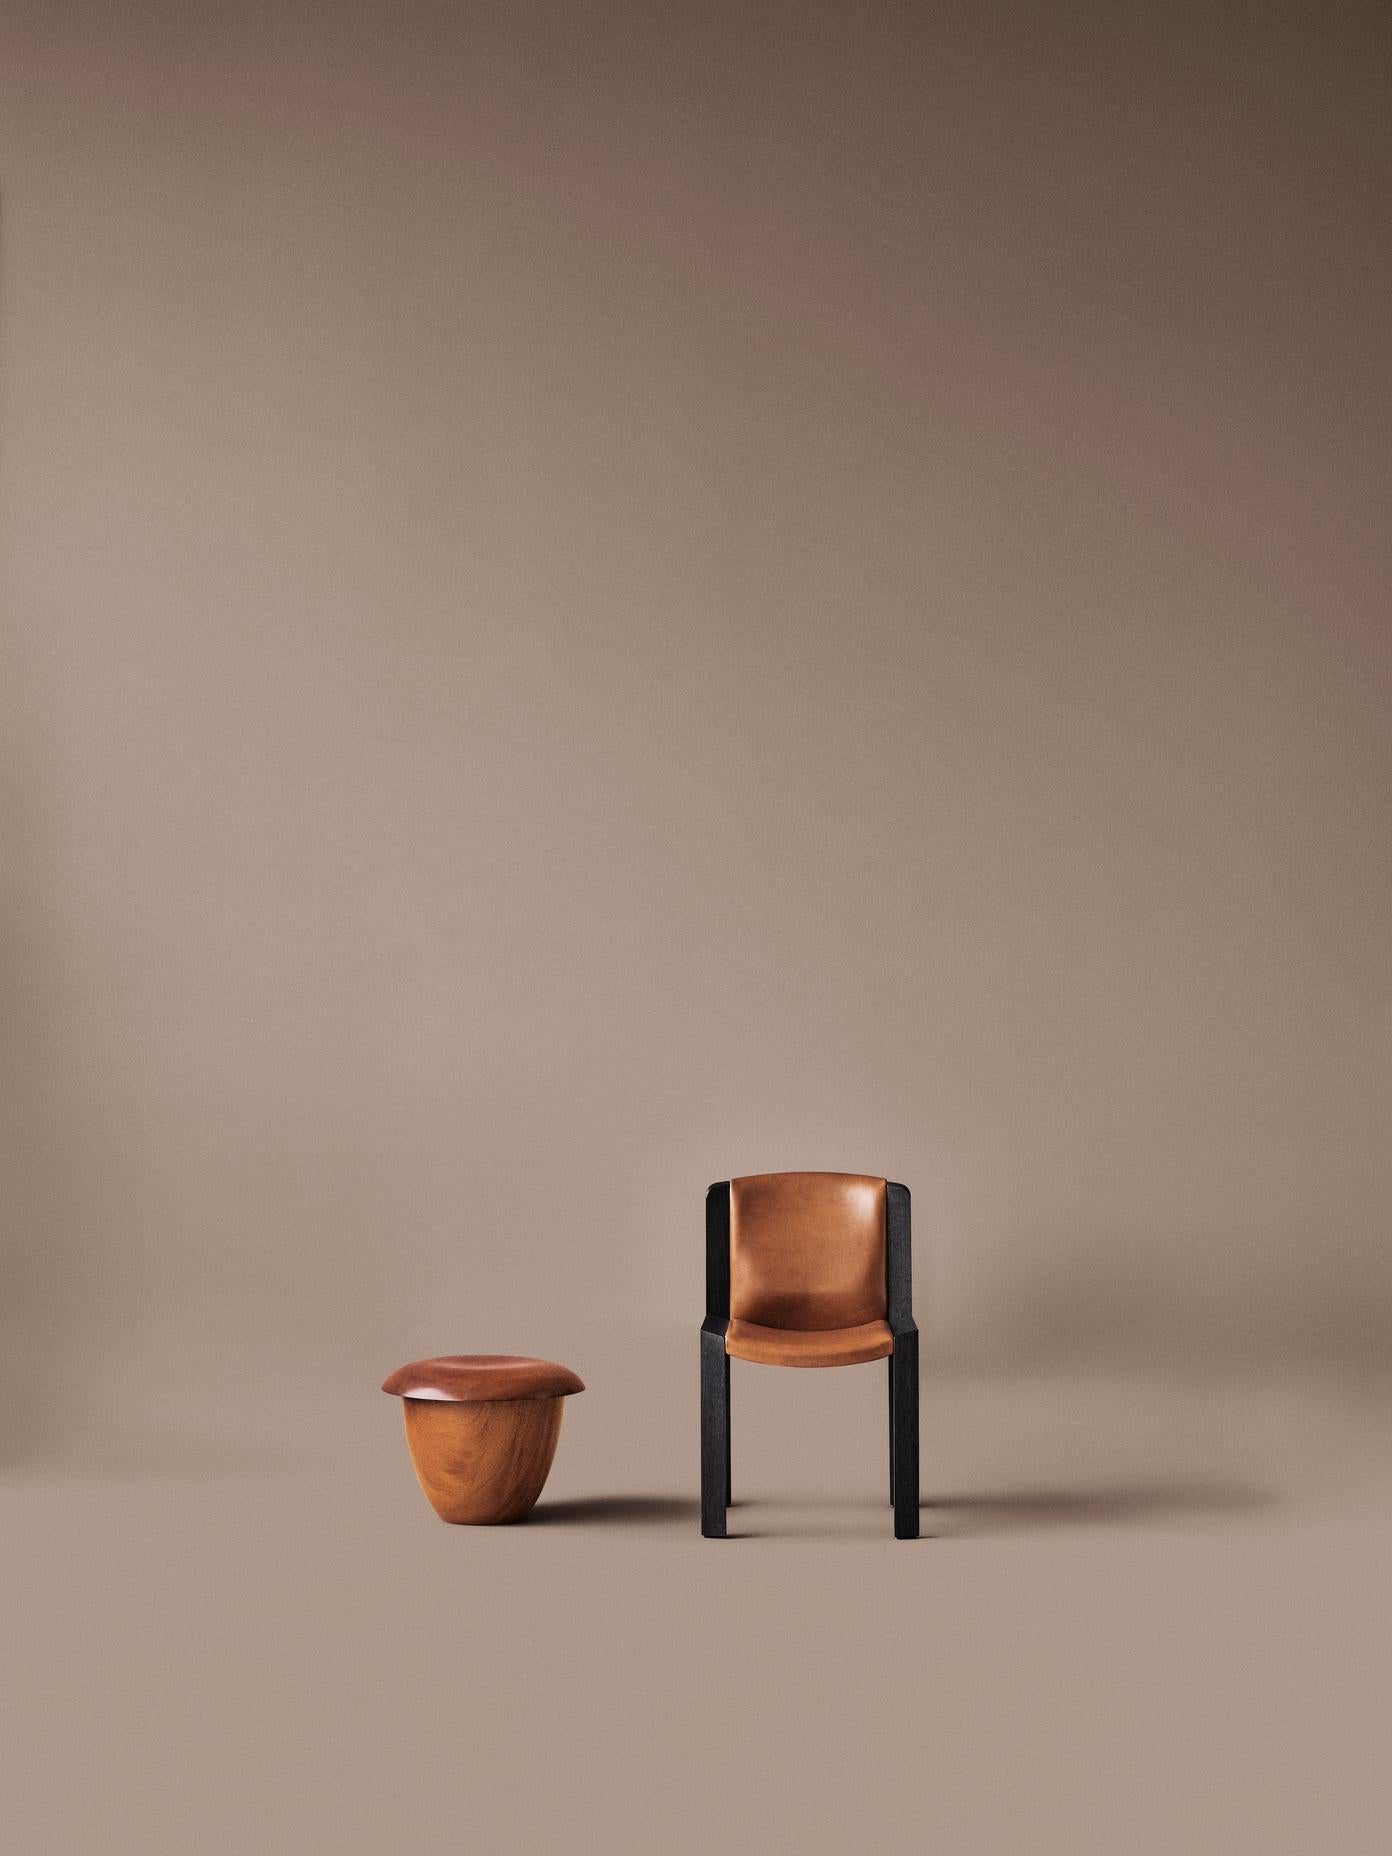 Set of Six Joe Colombo 'Chair 300' Wood and Kvadrat Fabric by Karakter For Sale 1